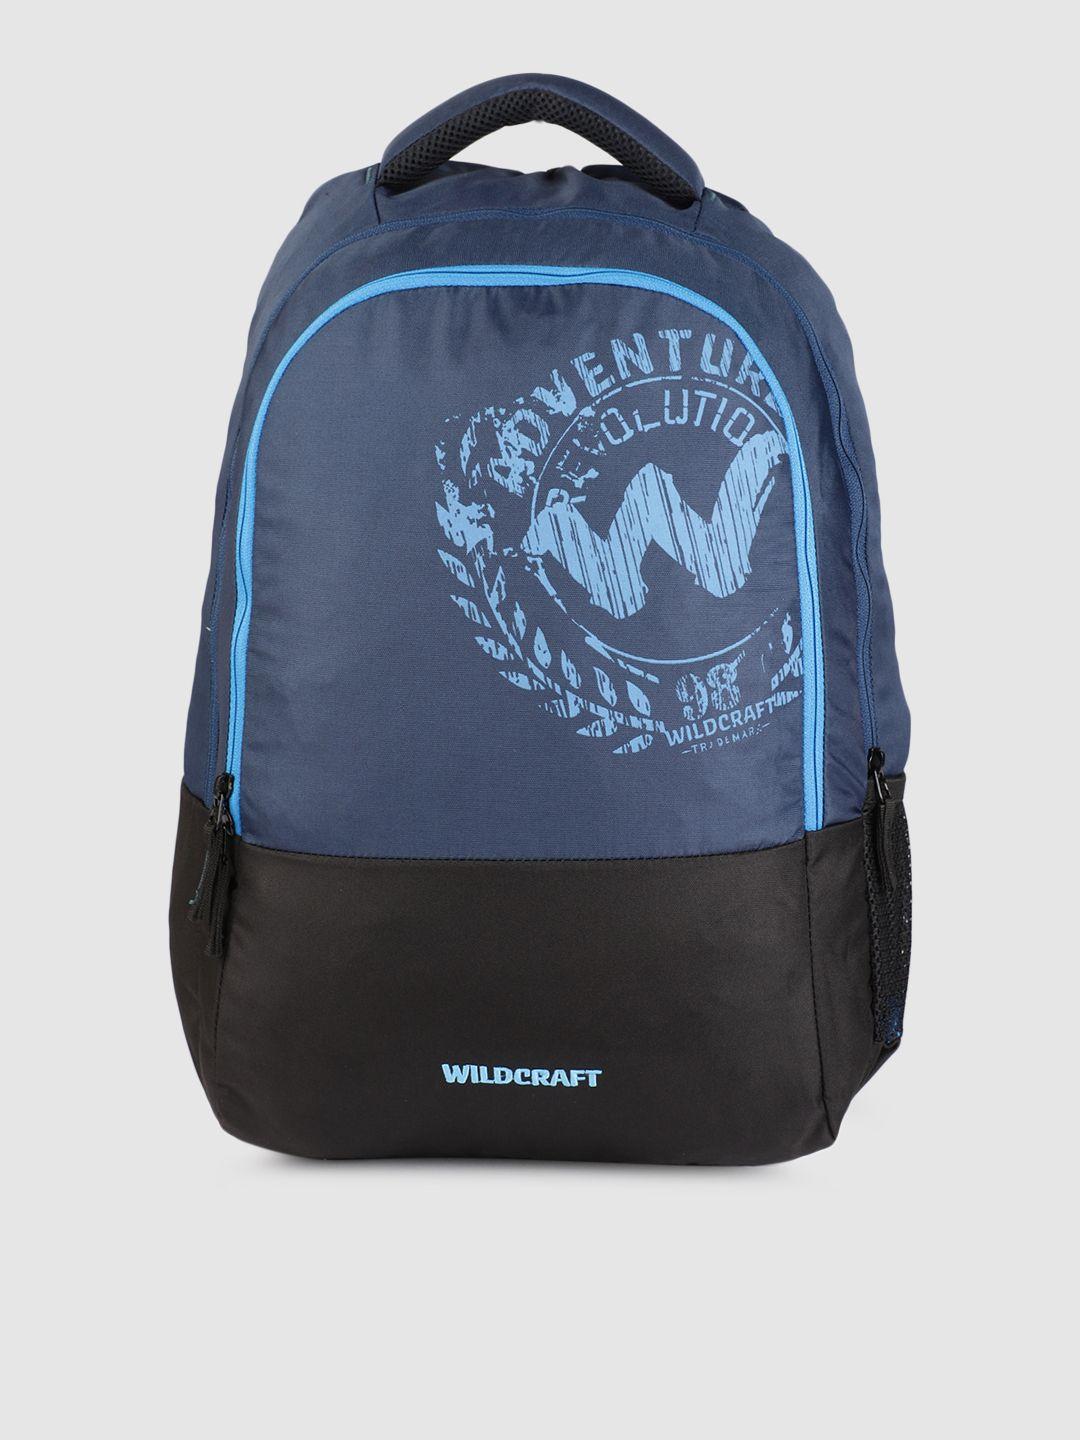 wildcraft unisex navy blue graphic backpack lp 4 backpack